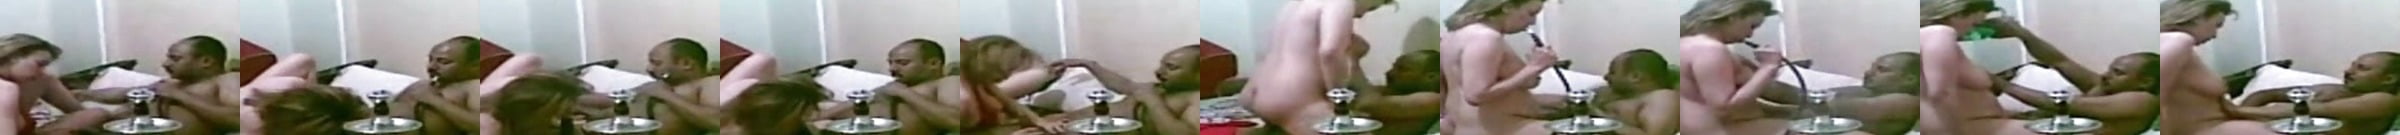 arab homemade sex video tube Porn Pics Hd